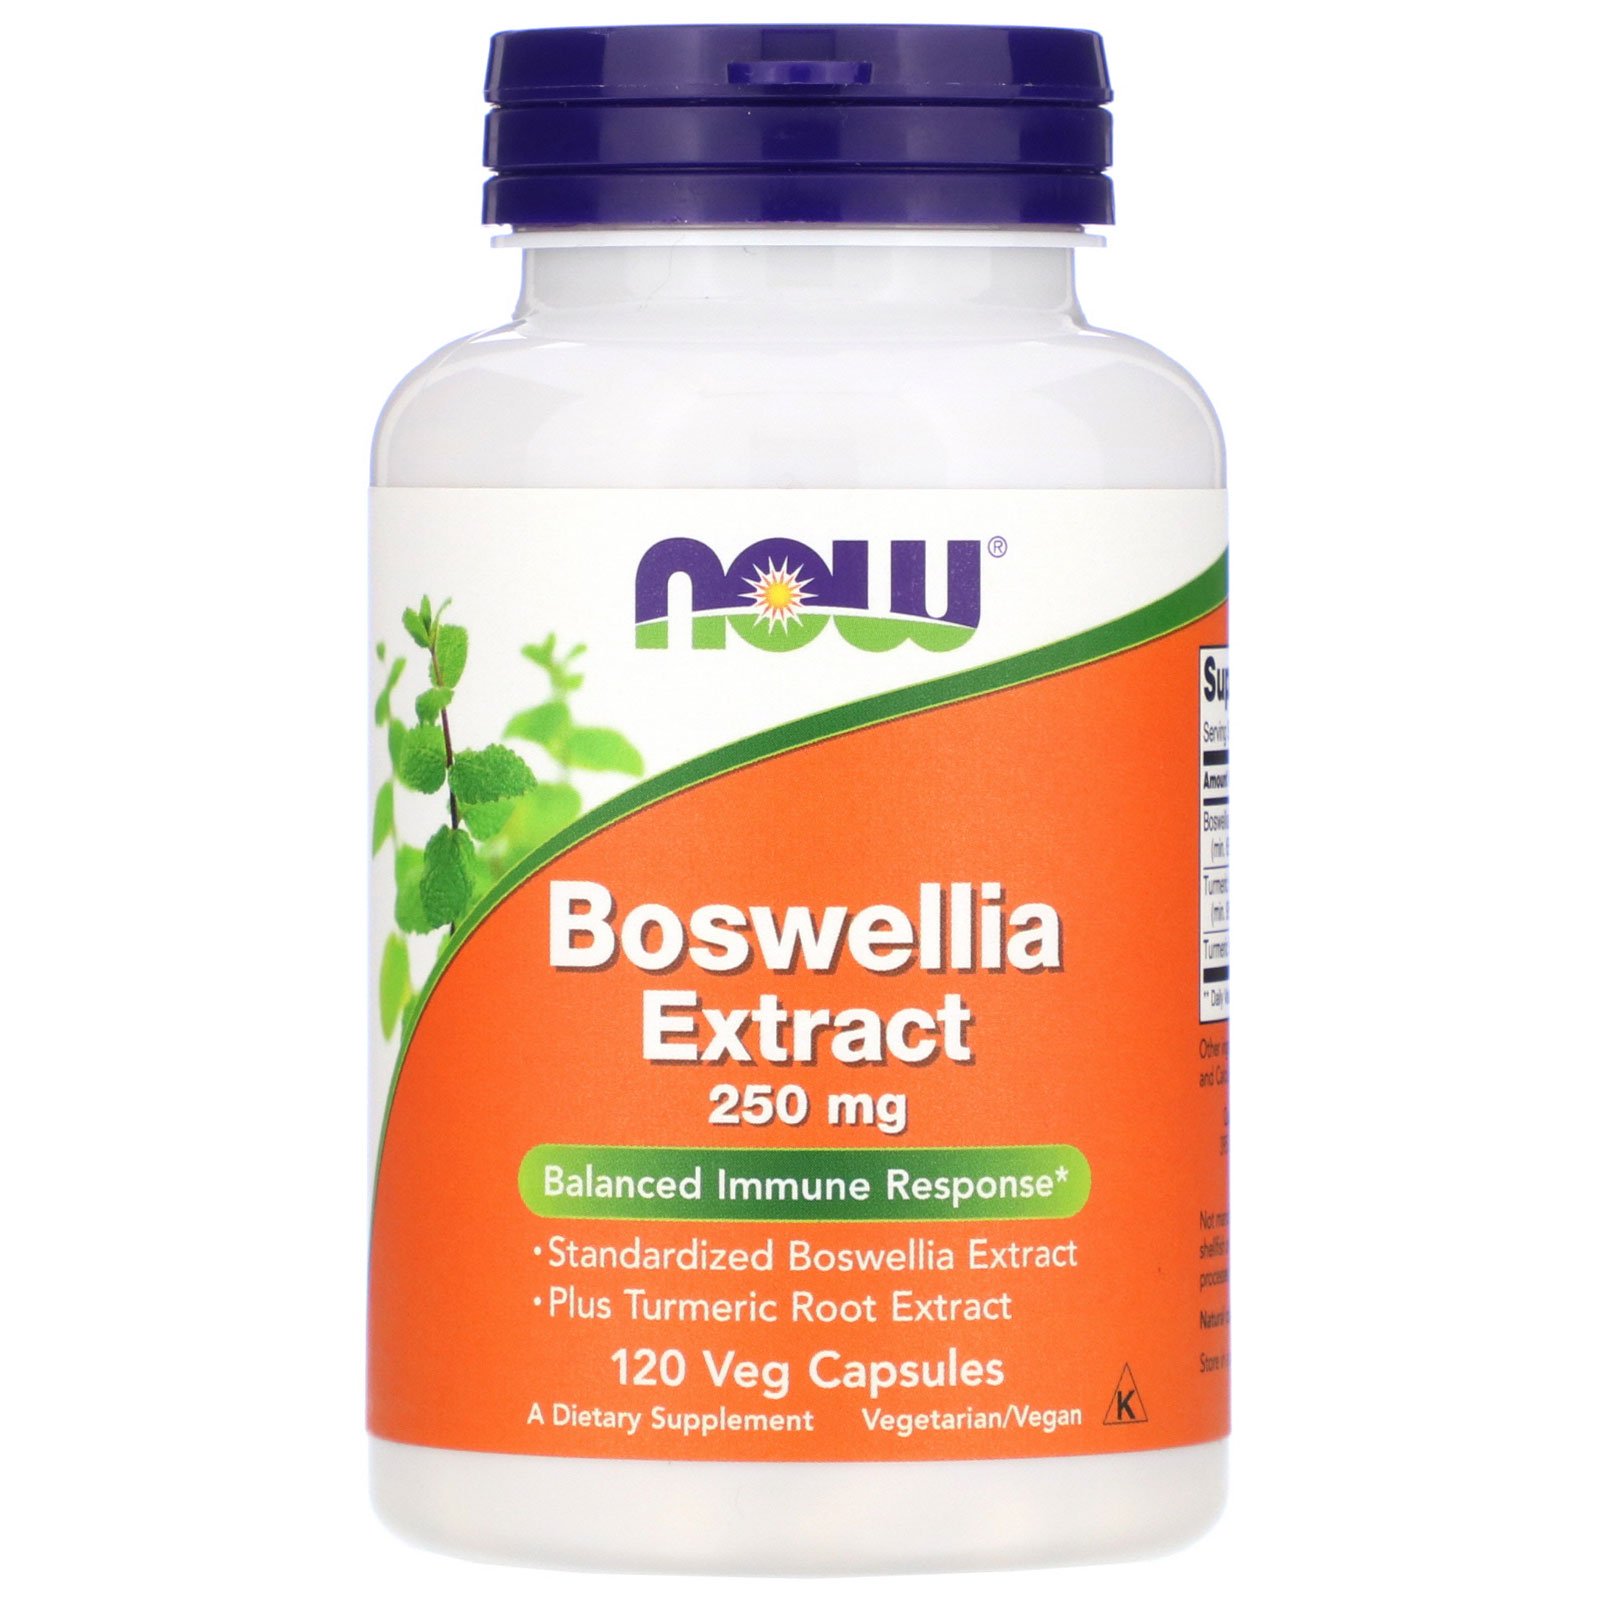 Boswellia Extract, Босвеллия Экстракт 250 мг - 120 капсул